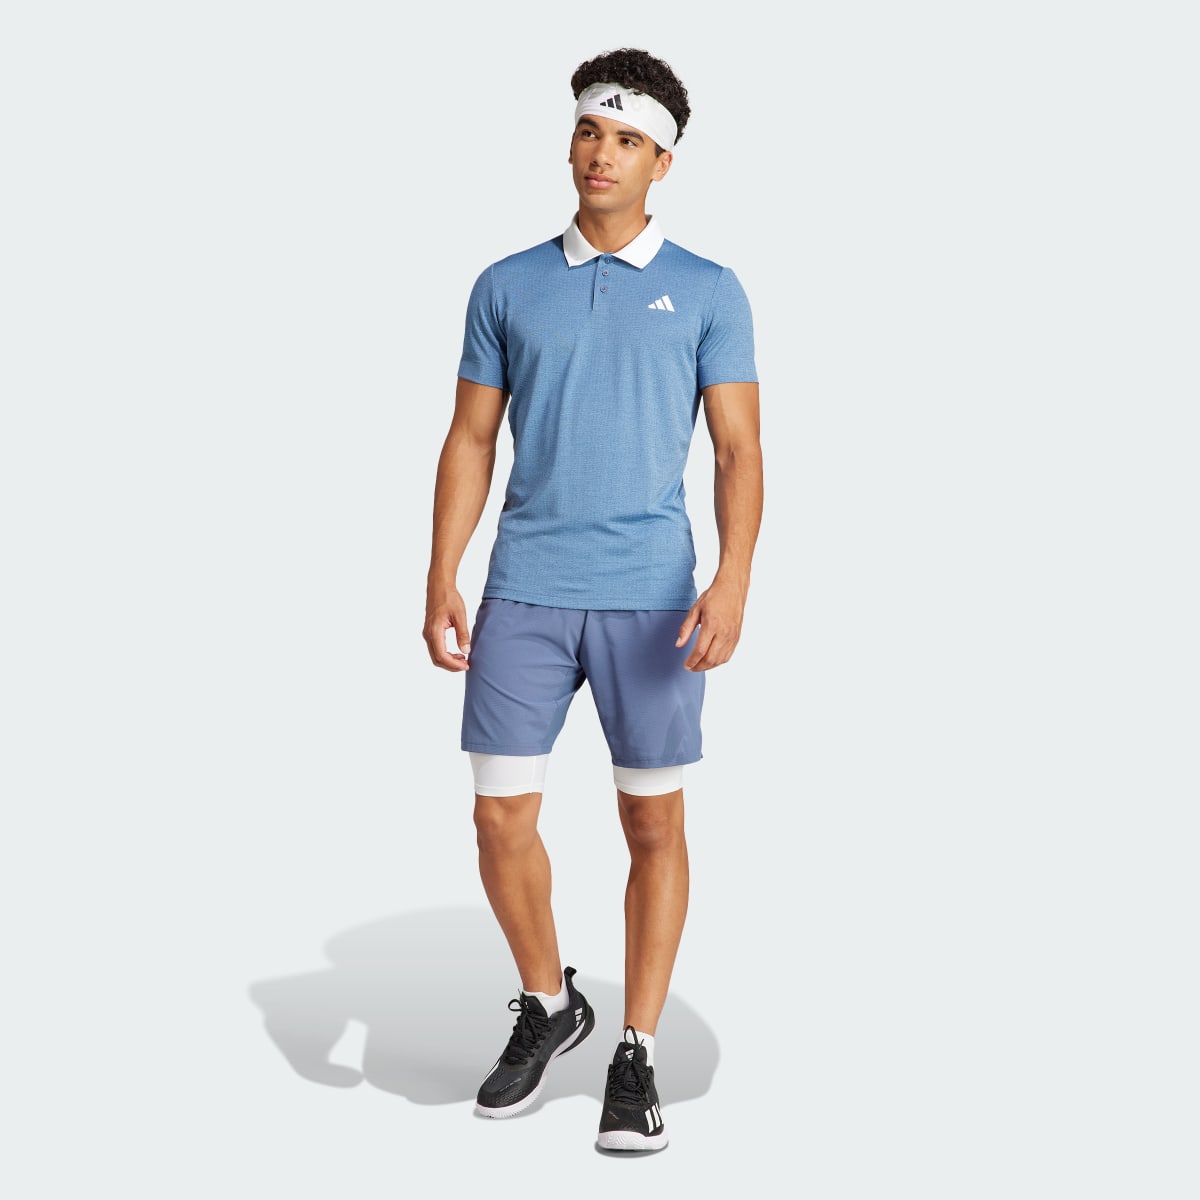 Adidas Tennis FreeLift Polo Shirt. 6